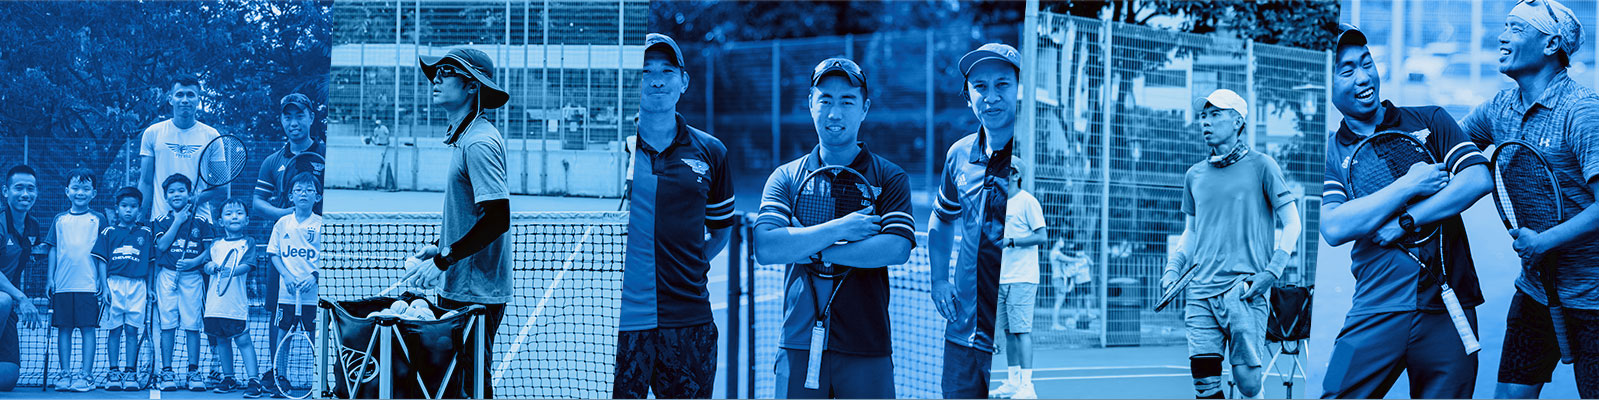 Tennis Instructors in Singapore